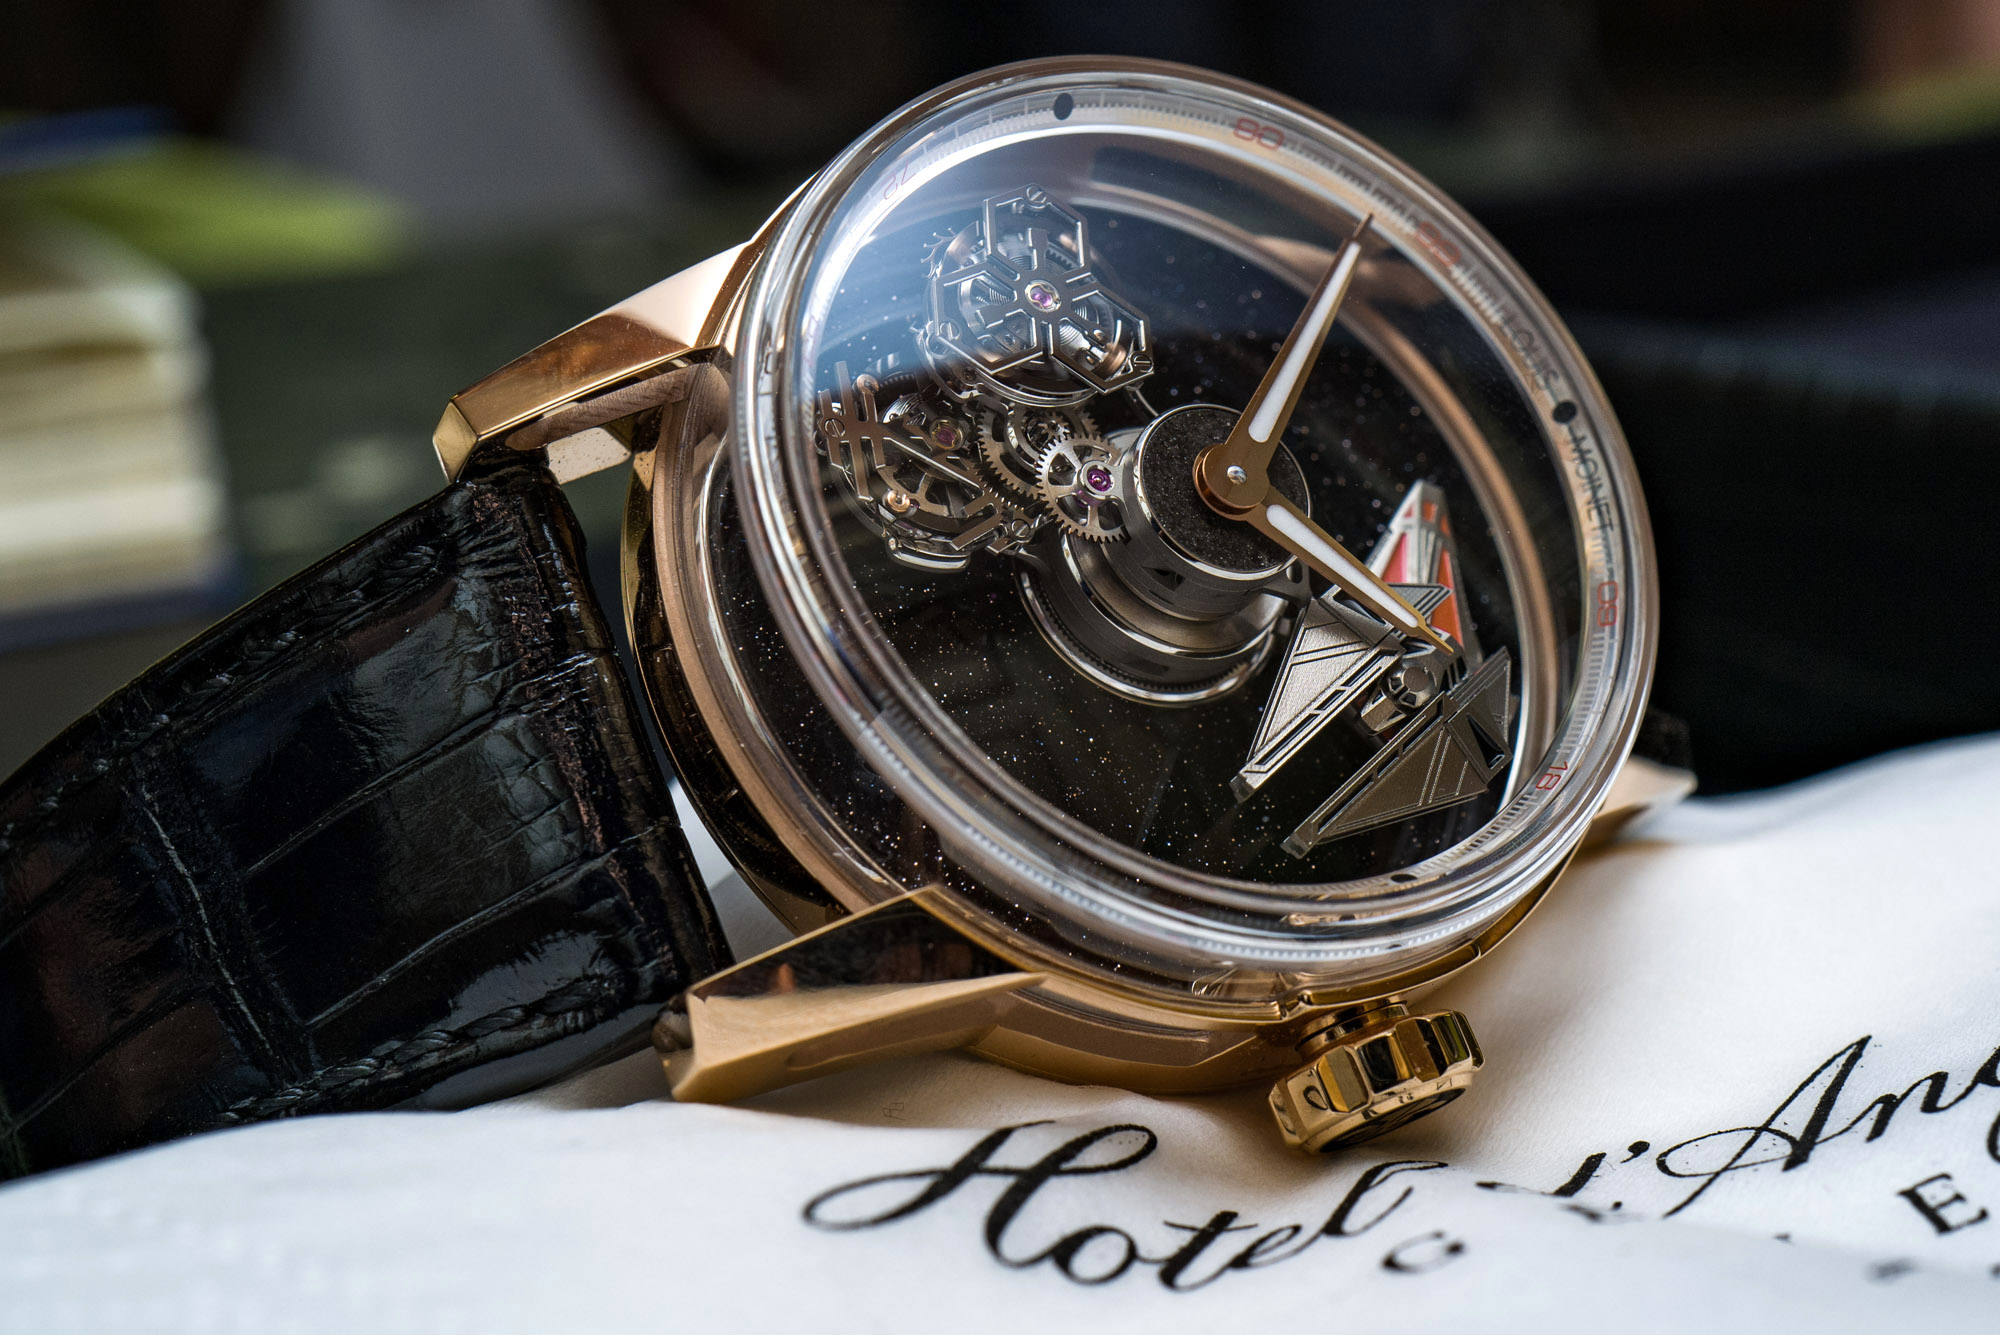 Louis Moinet Watches